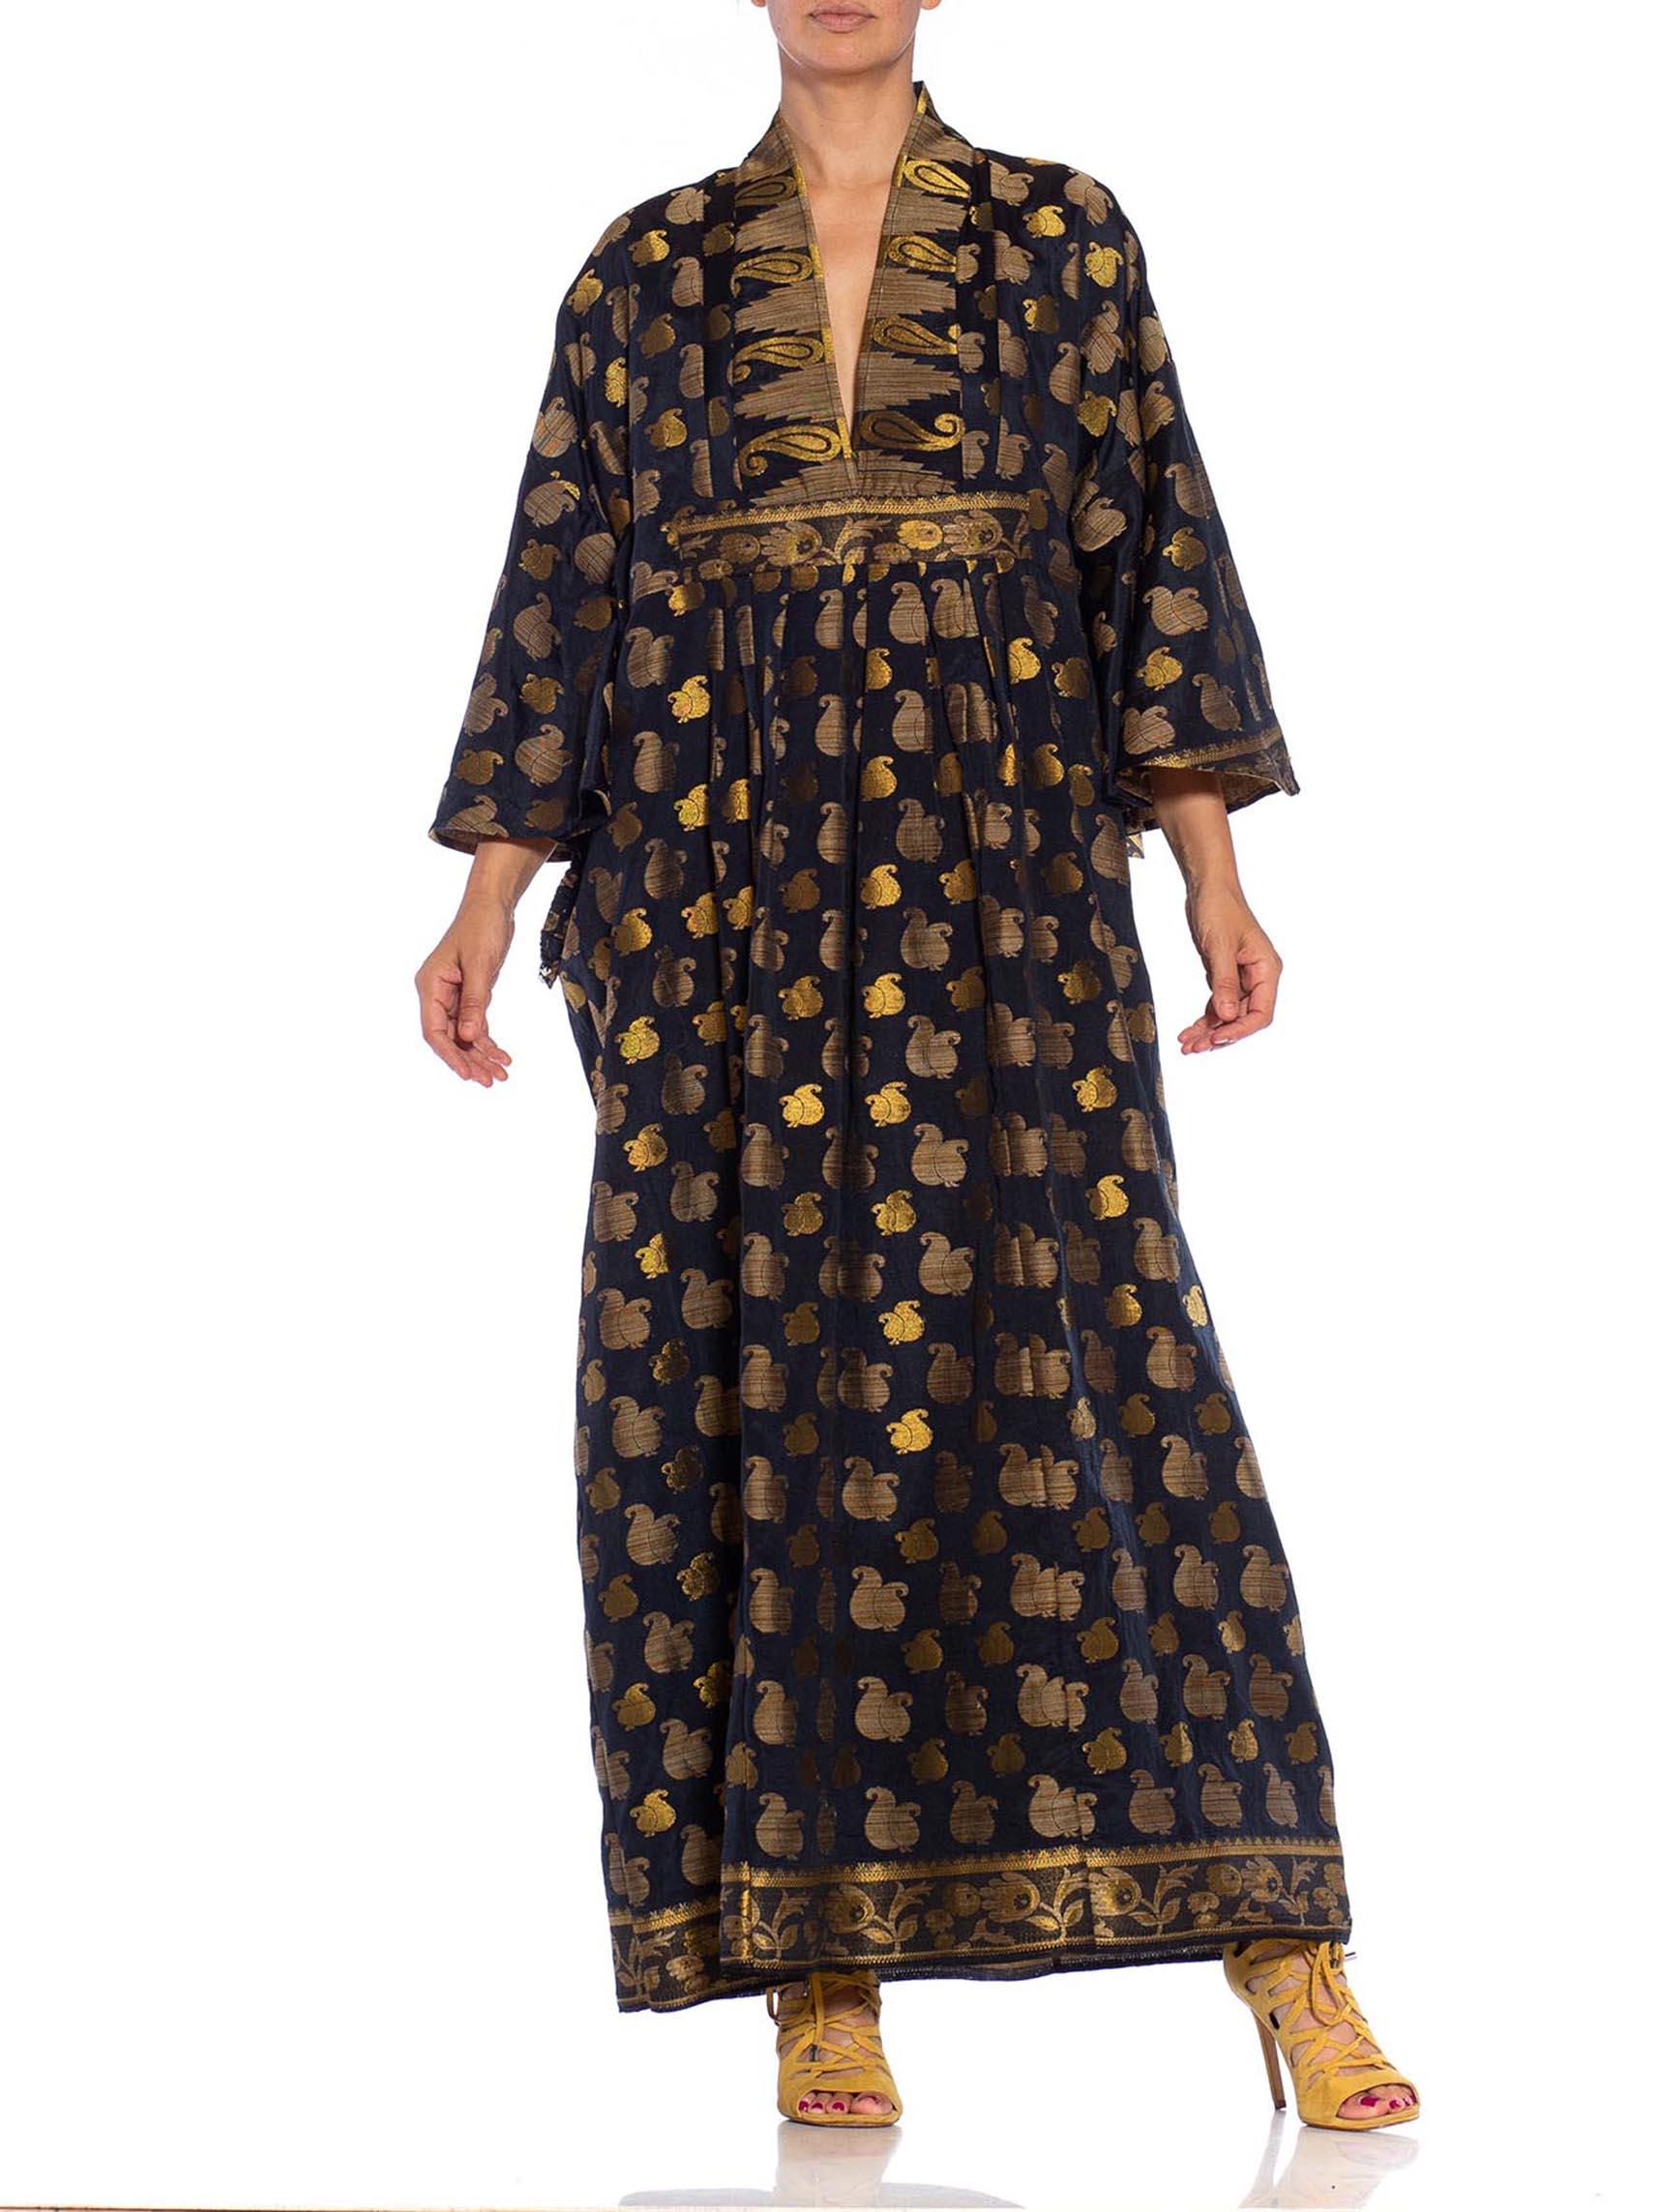 MORPHEW COLLECTION Black & Gold Metallic Silk Kaftan Made From Vintage Saris For Sale 6